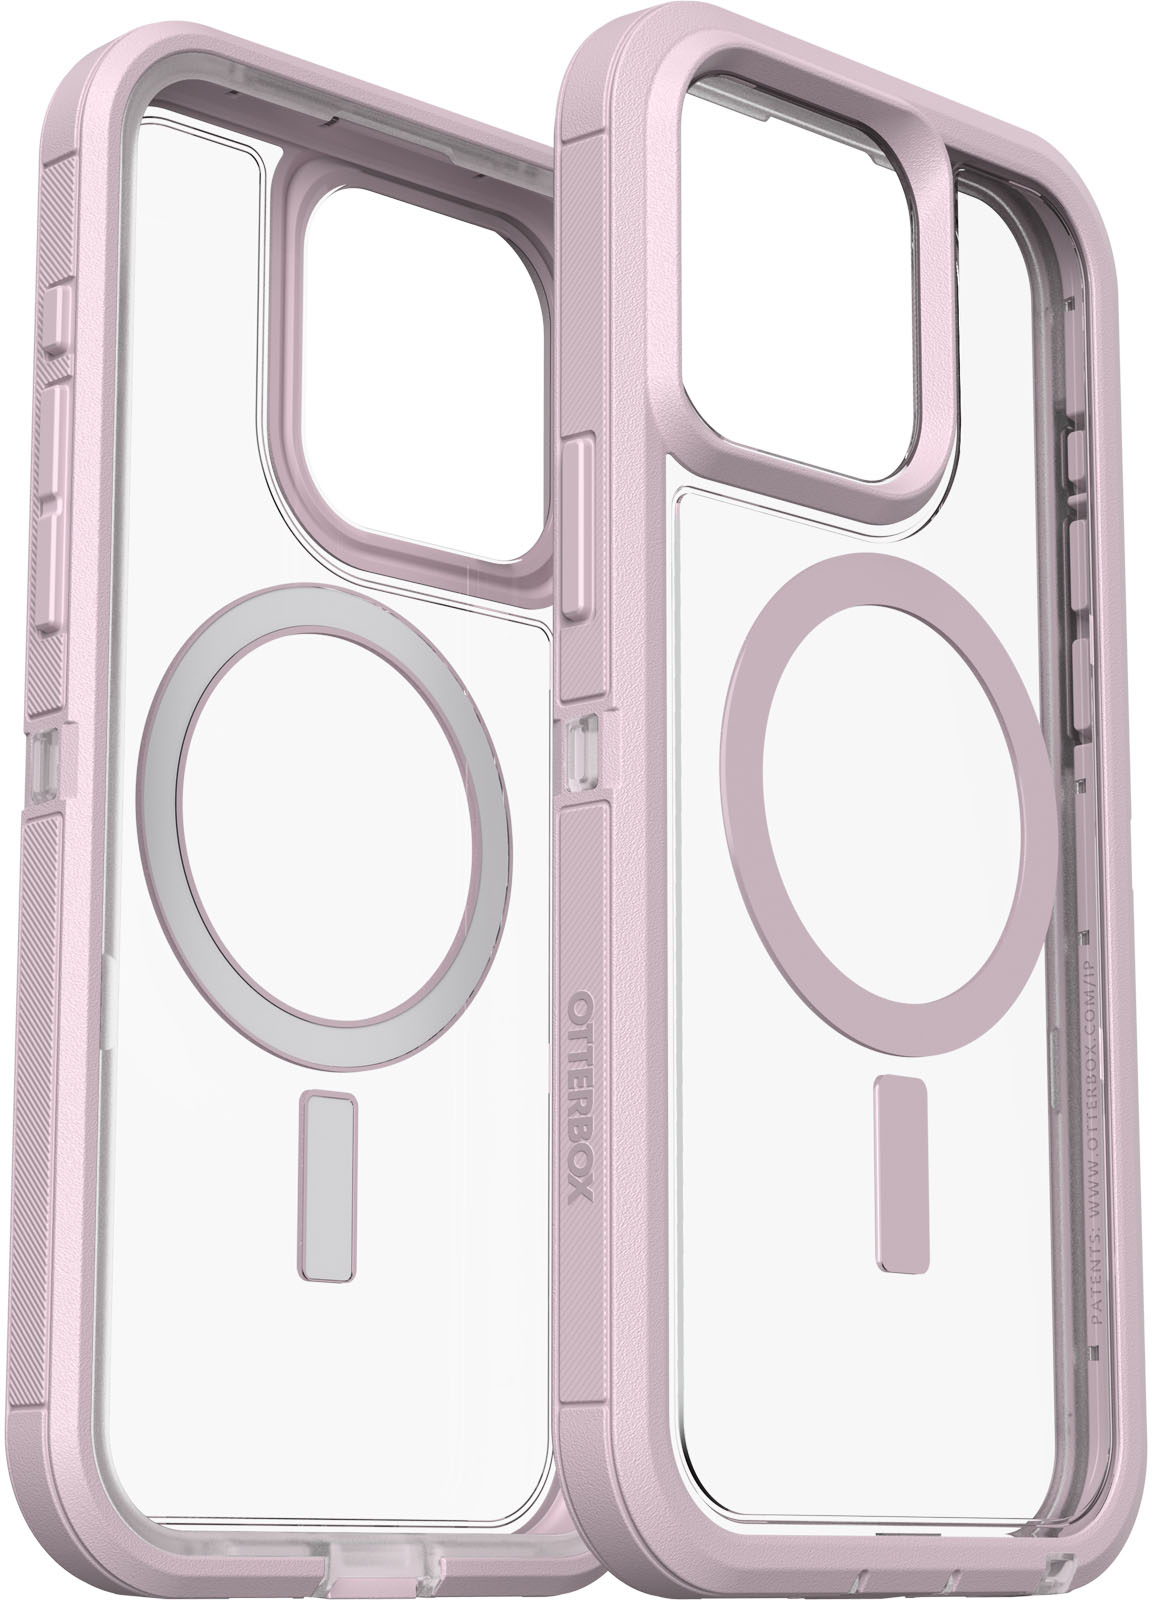 OtterBox Defender XT iPhone 15 Pro Max Case - Black - Noel Leeming